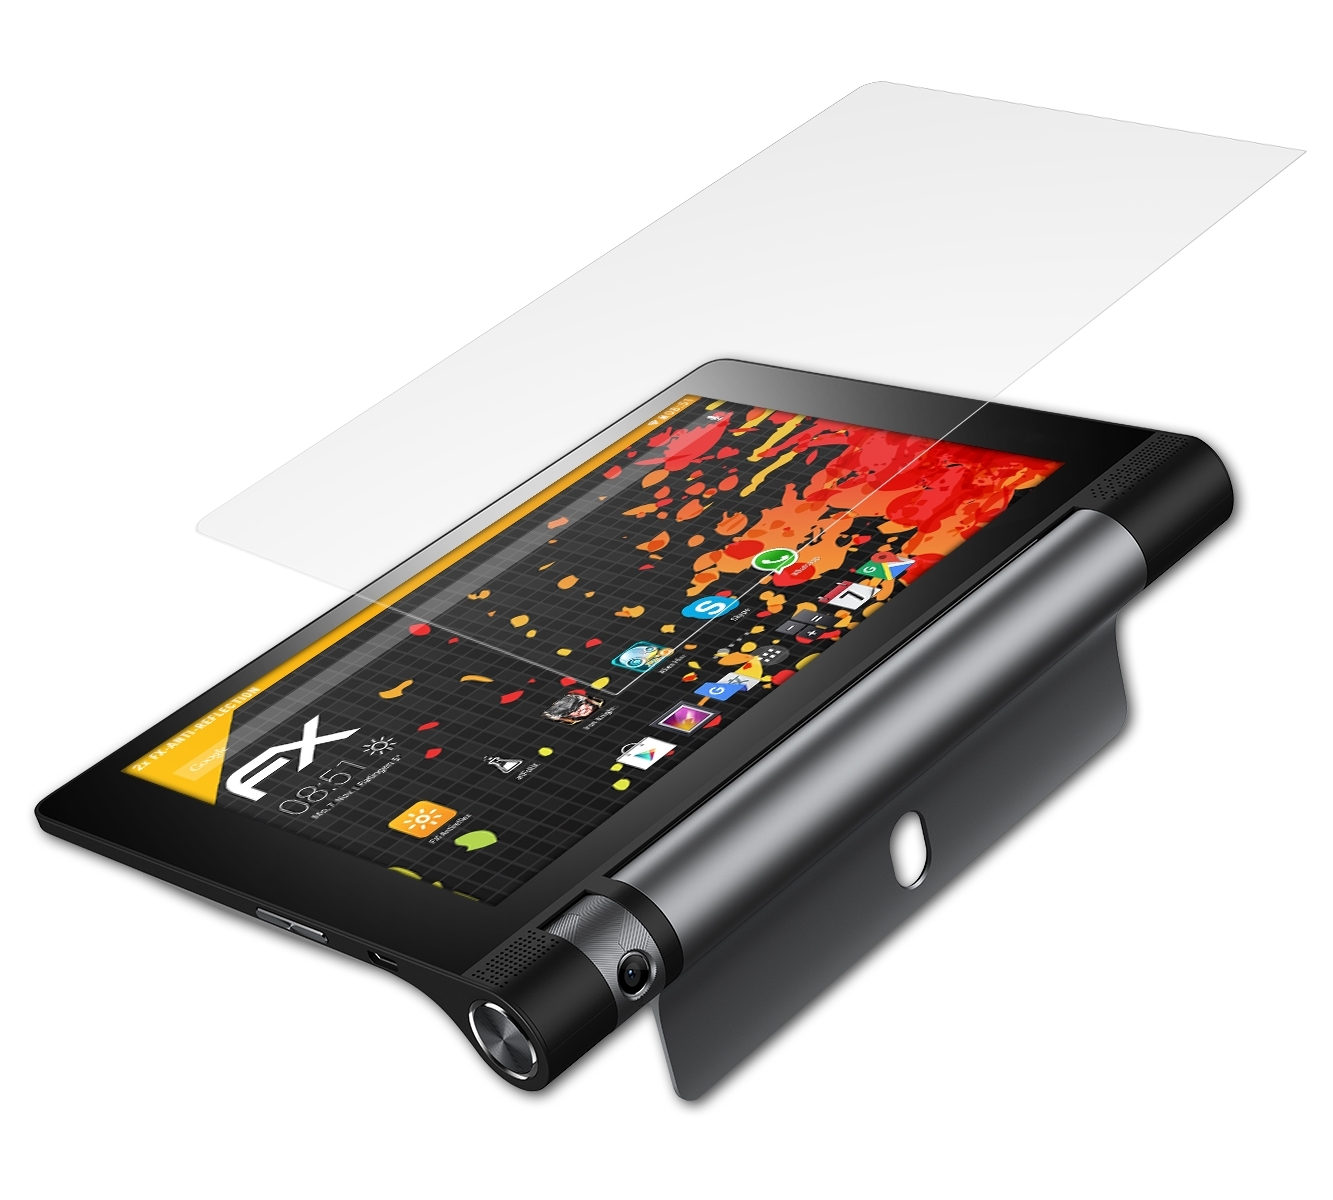 ATFOLIX 2x 8.0) 3 Lenovo Yoga Displayschutz(für FX-Antireflex Tab